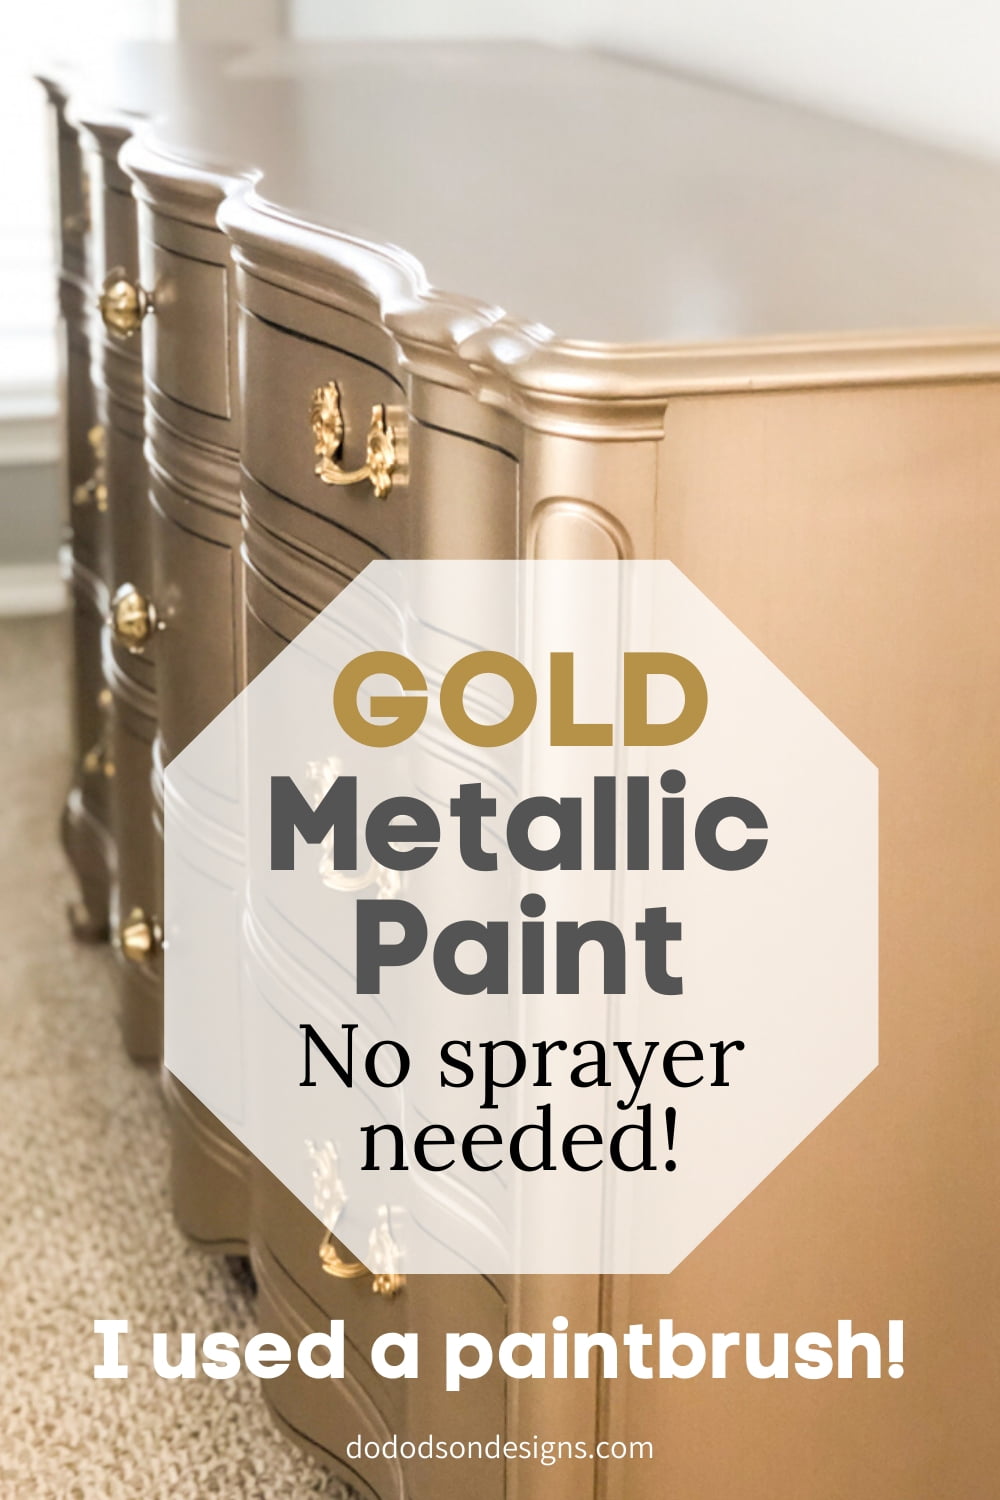 Metallic gold paint